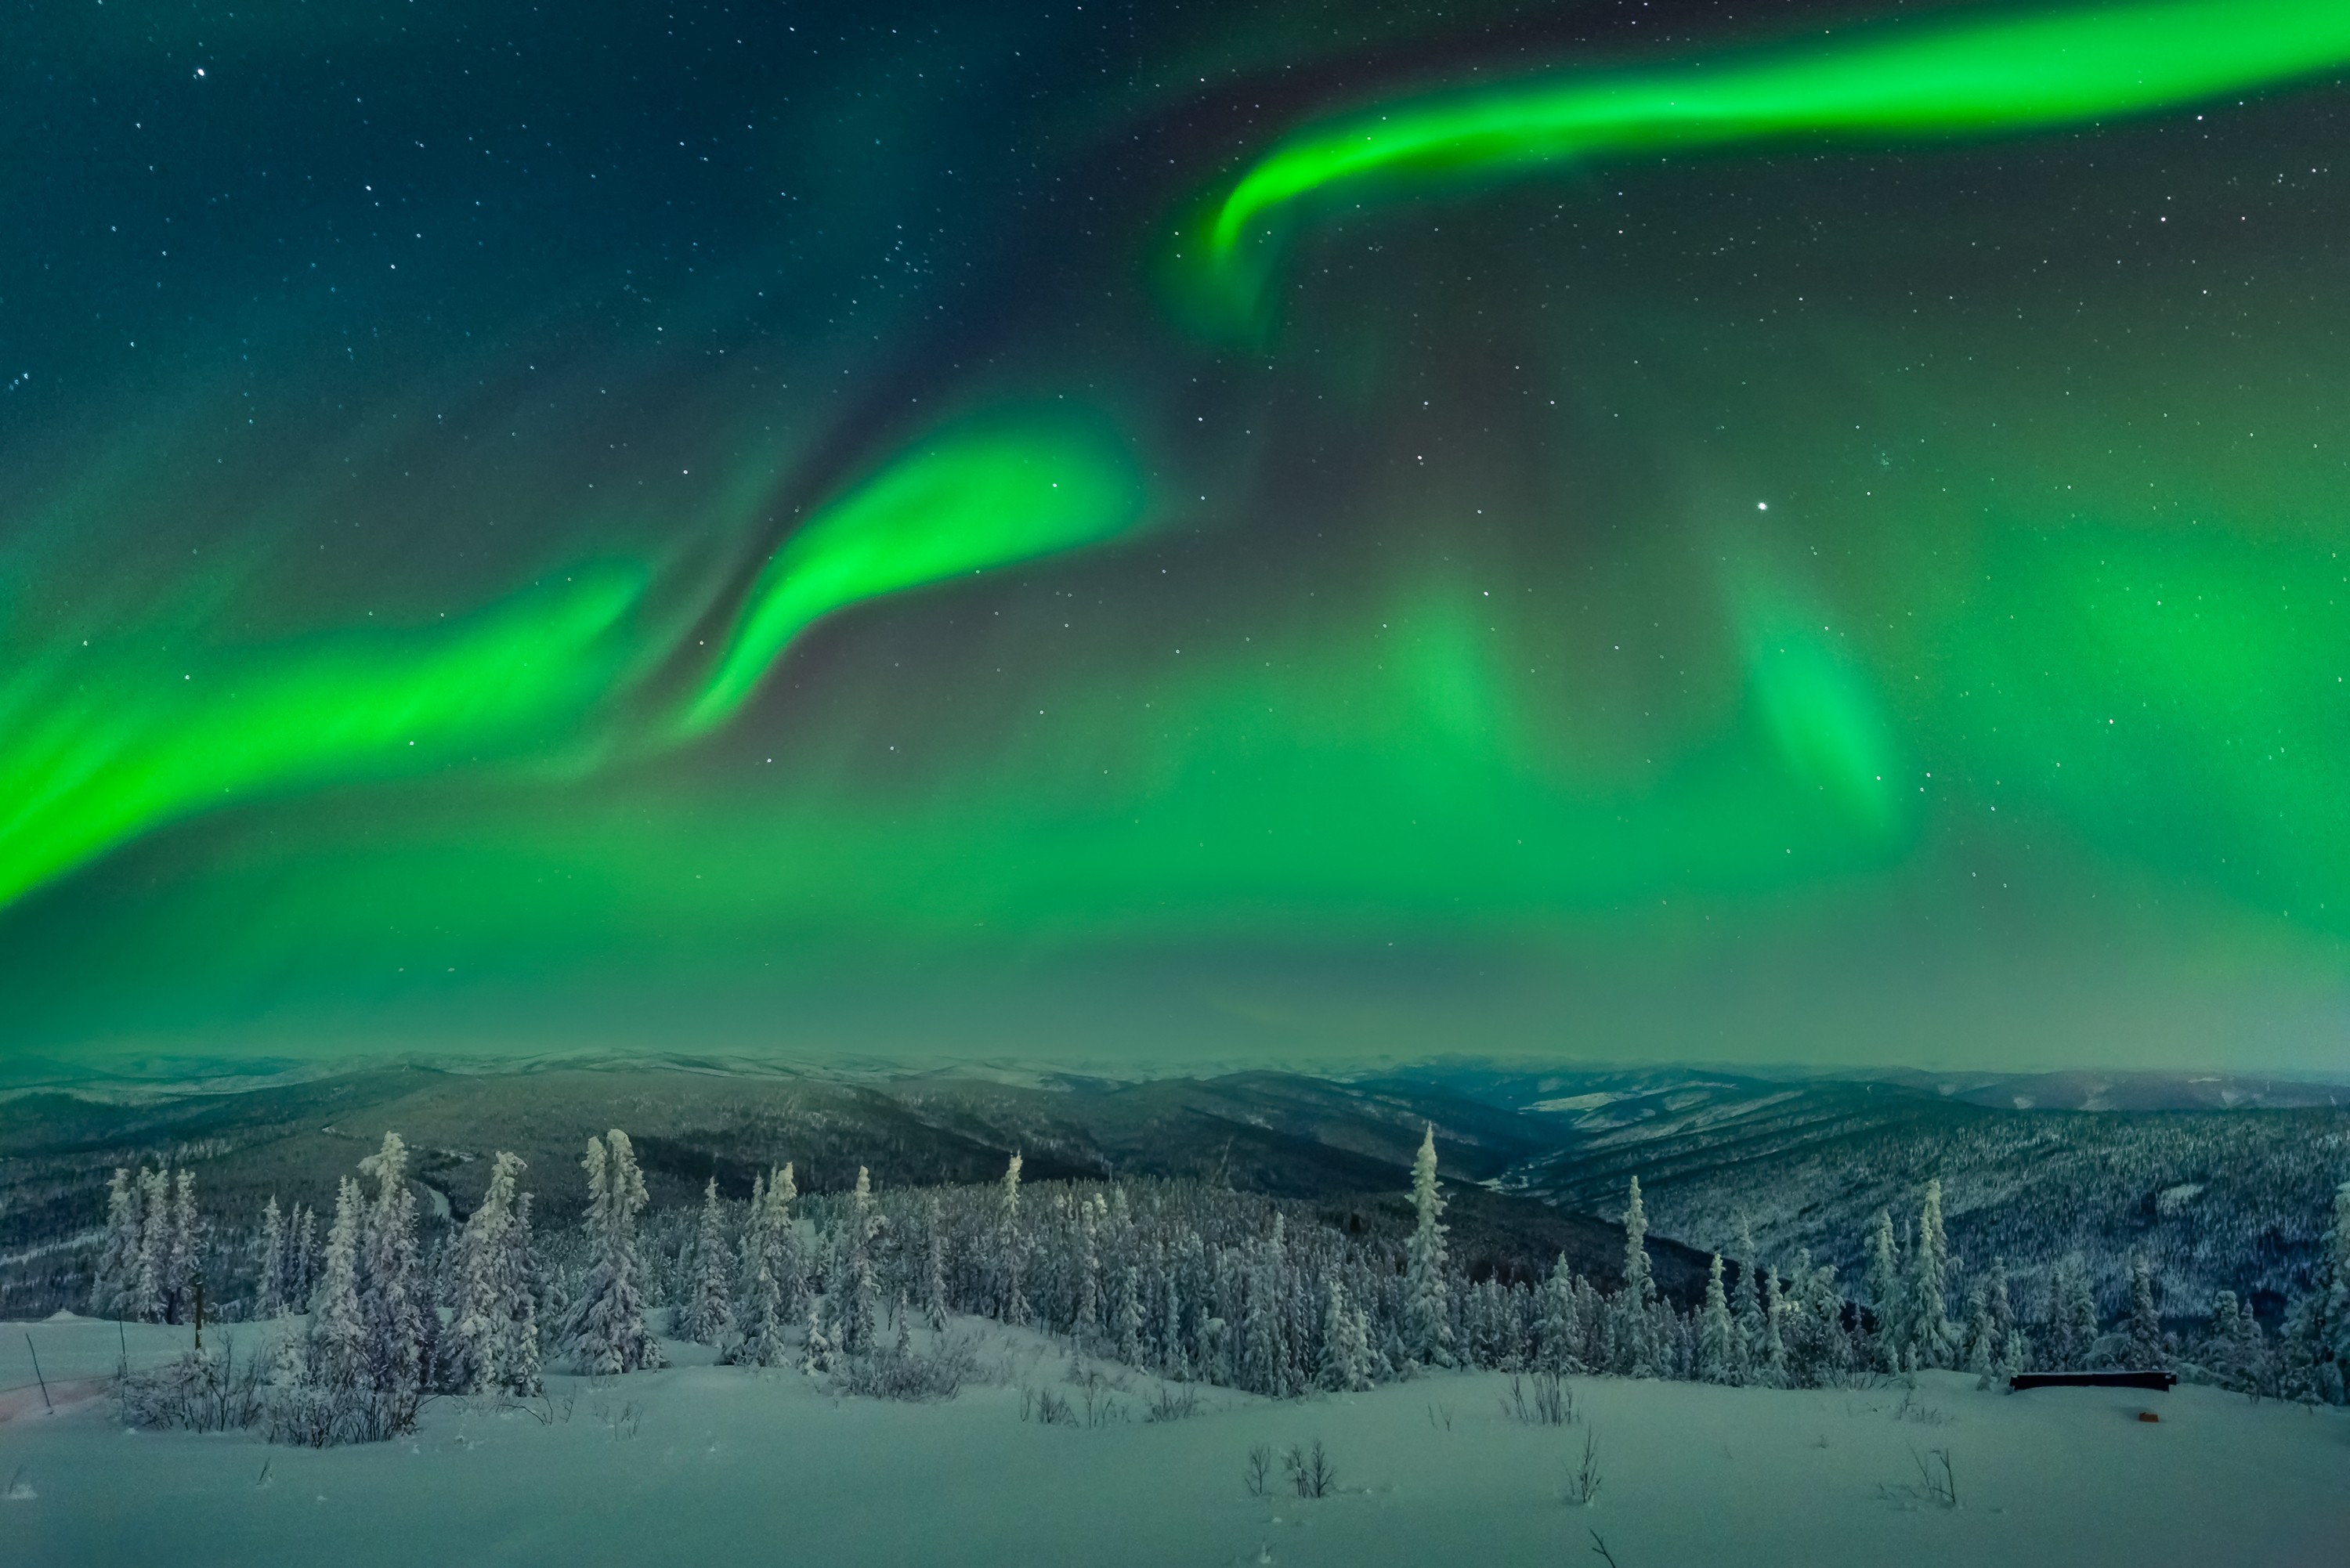 General 3000x2002 trees landscape snow aurorae nordic landscapes sky stars winter cold nature